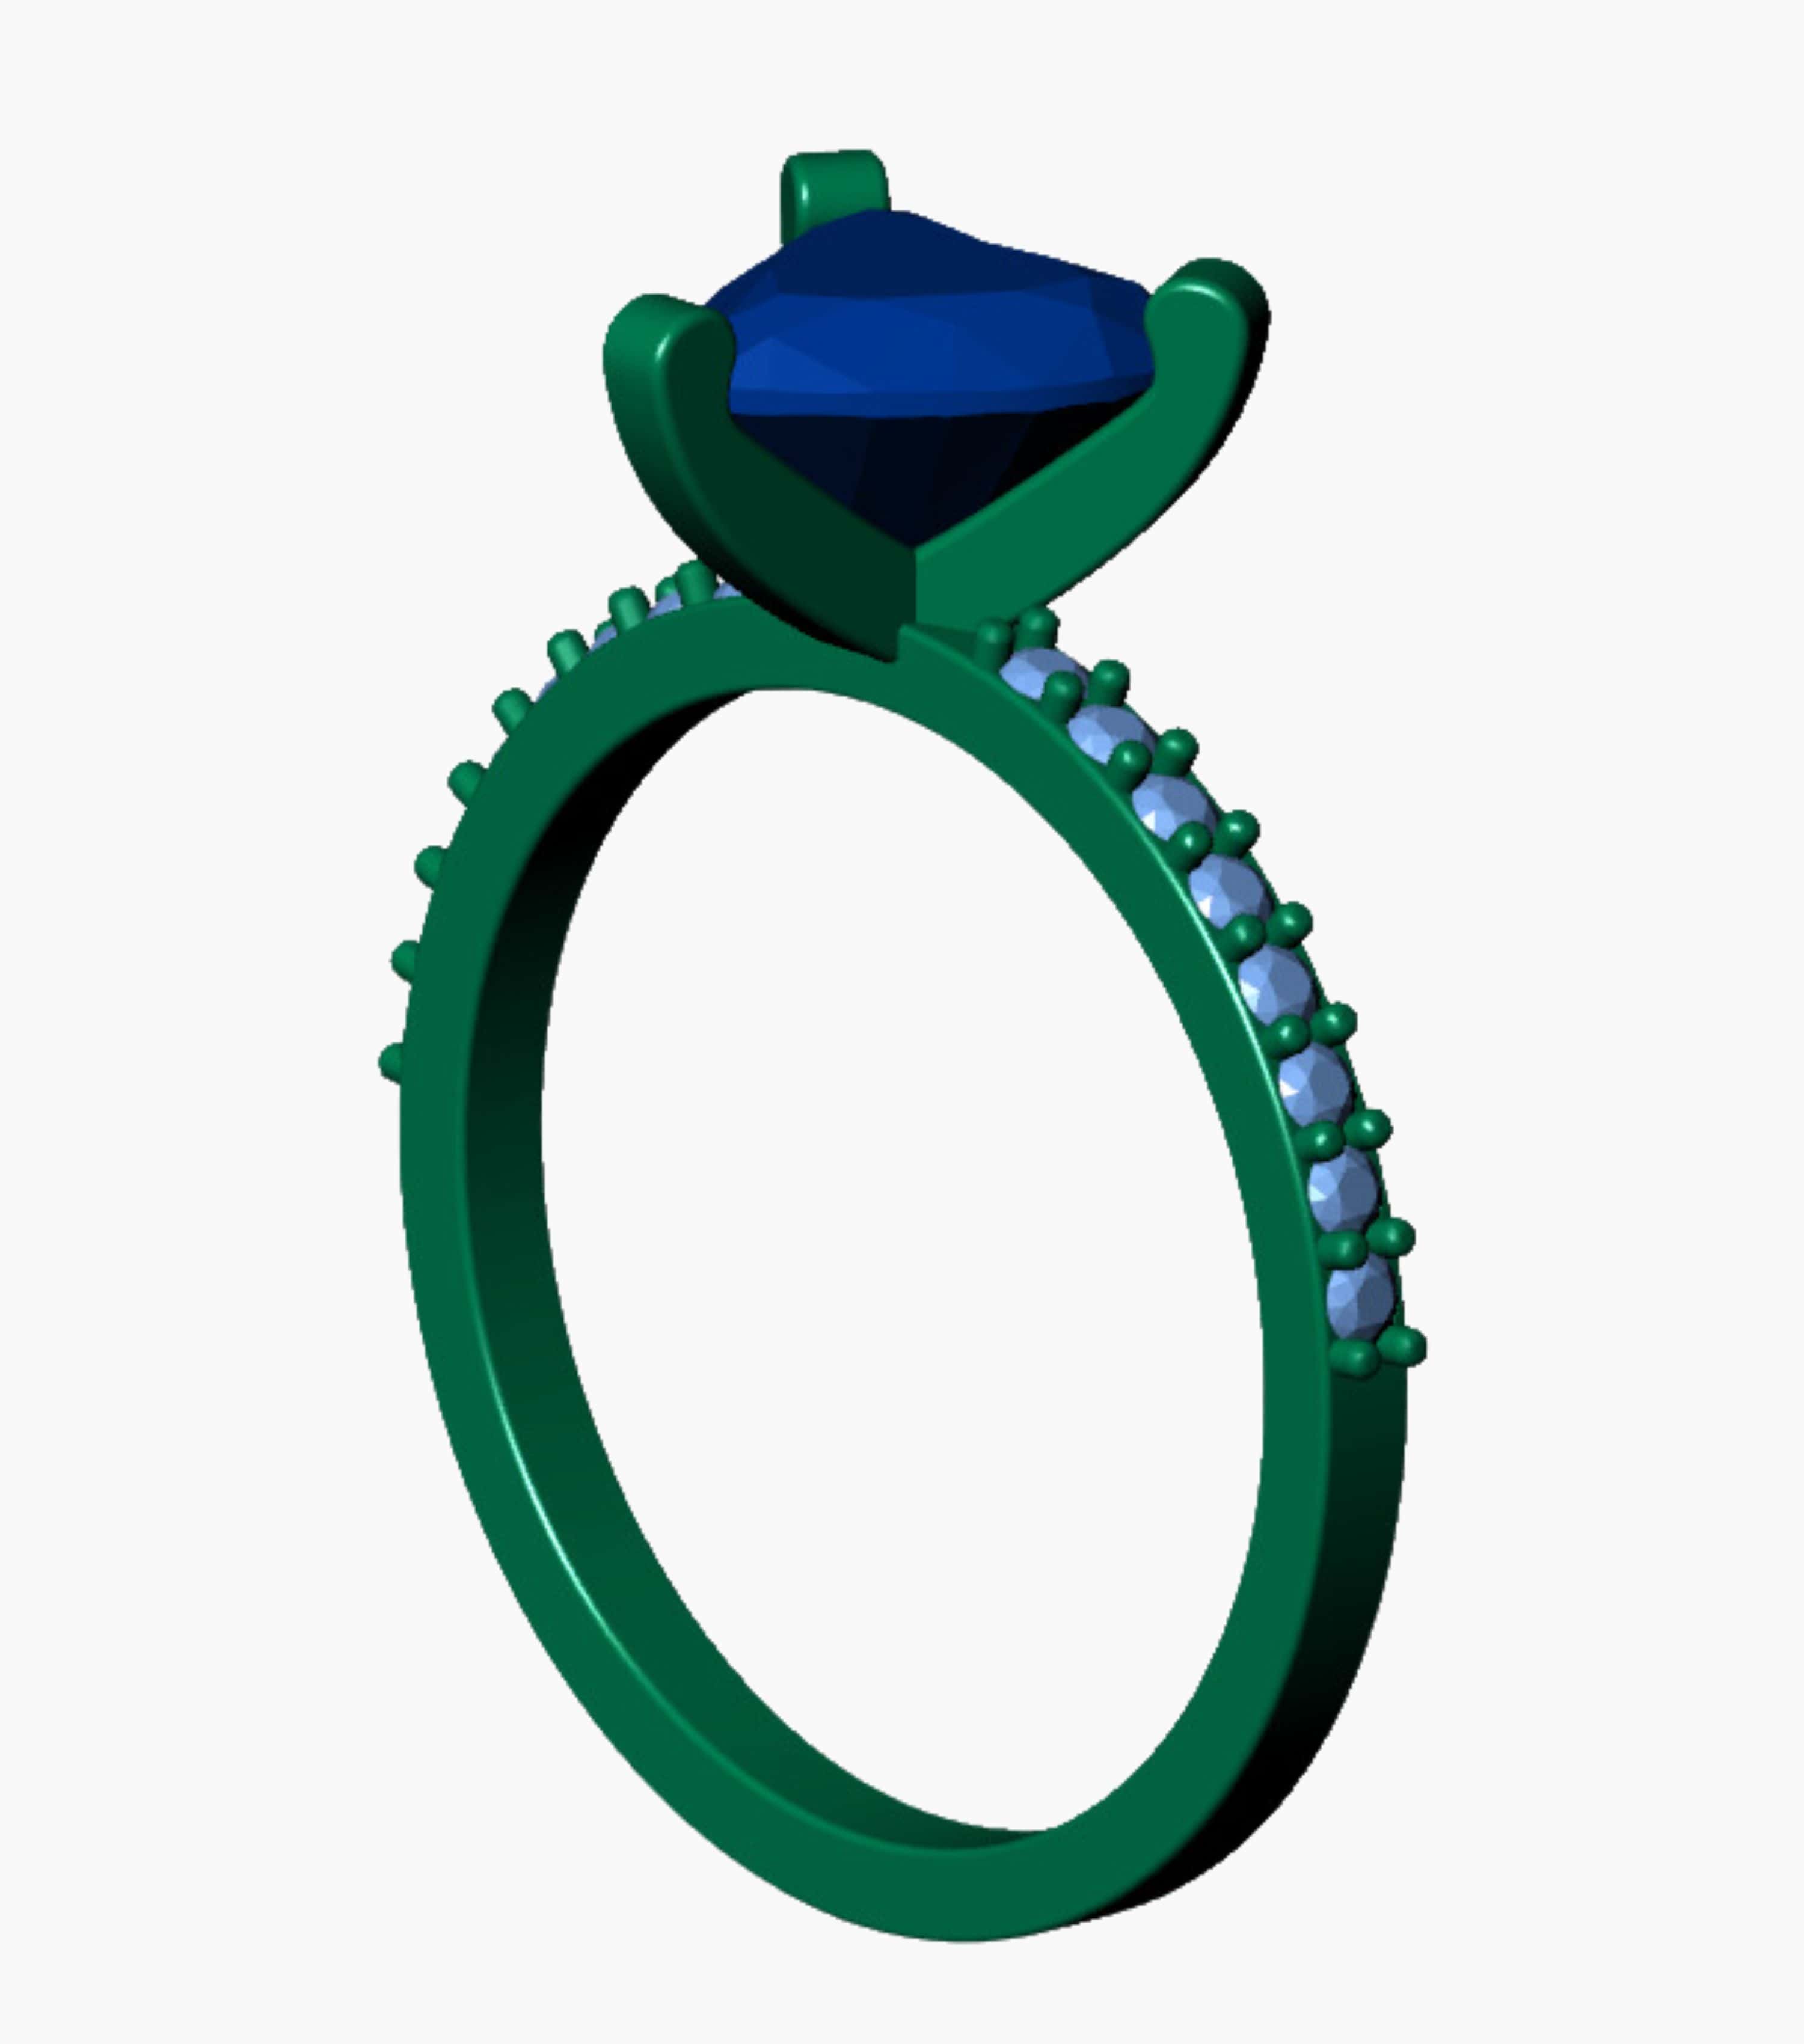 Cad design of heart shape engagement ring